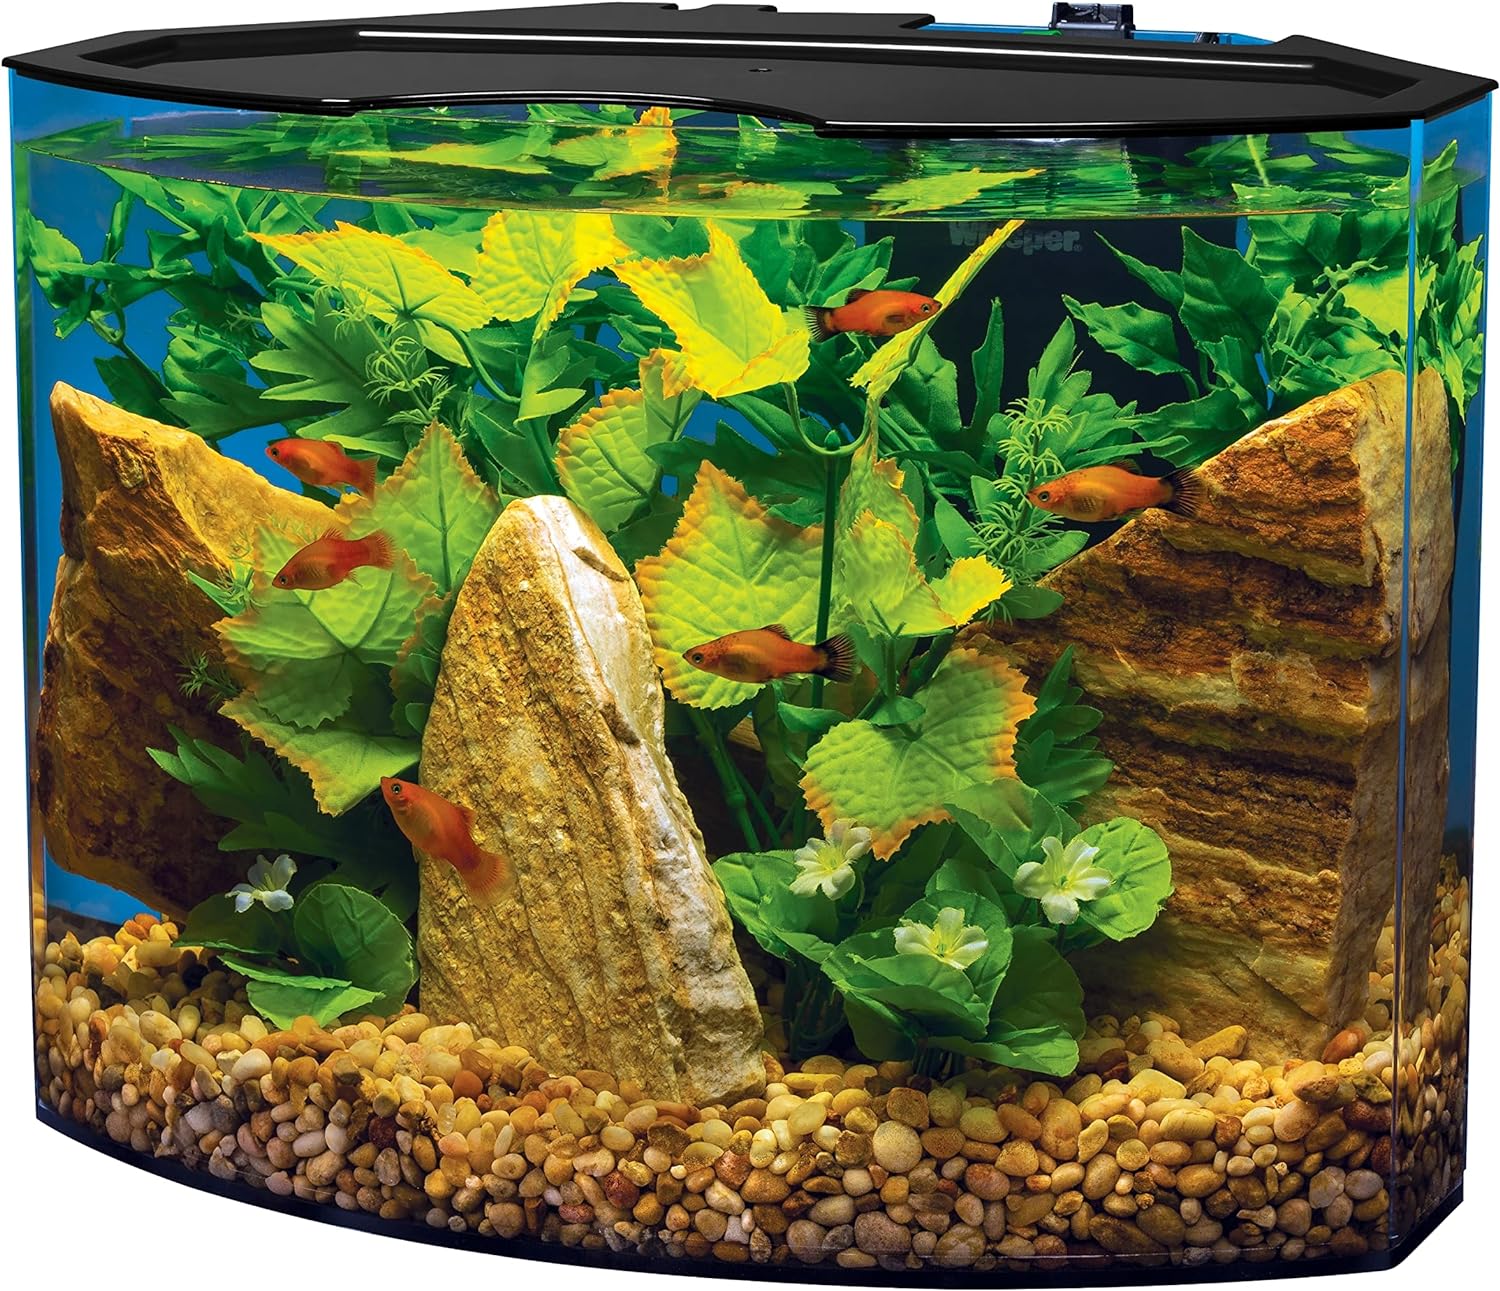 Tetra Crescent aquarium Kit 5 Gallons, Curved-Front Tank With LEDs,black